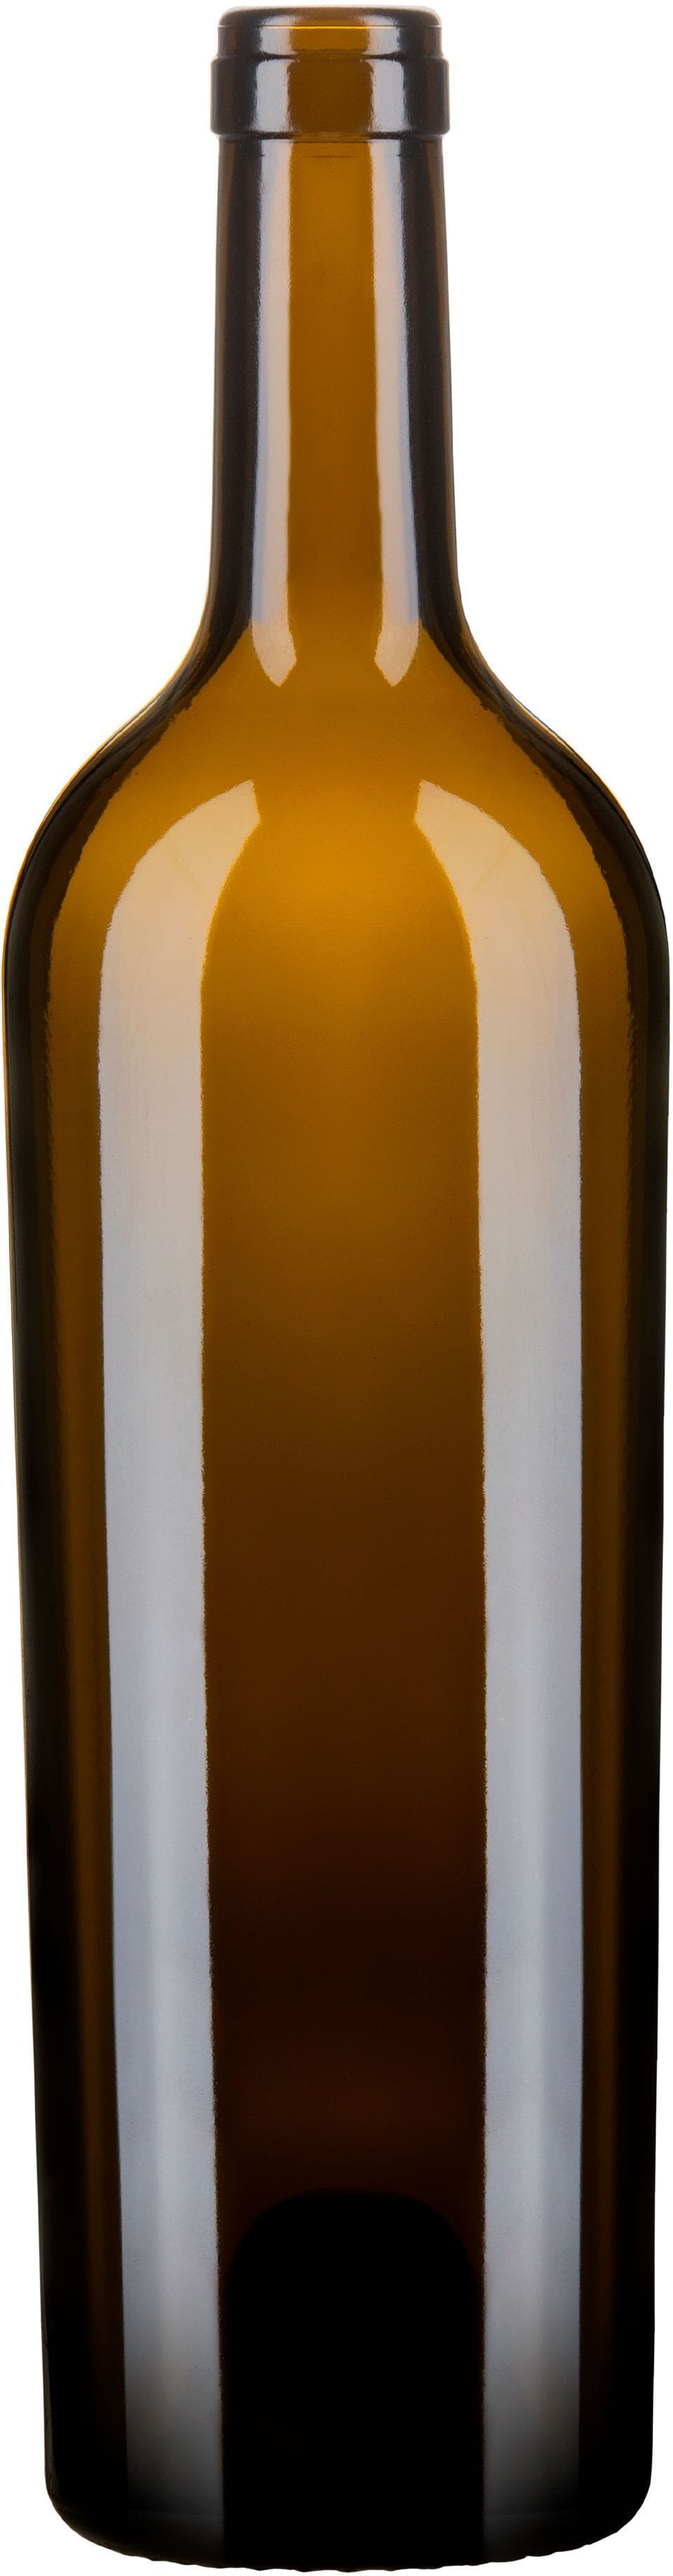 Flasche Bordeaux  JUMBO IBERICA 750 ml BG-Korken